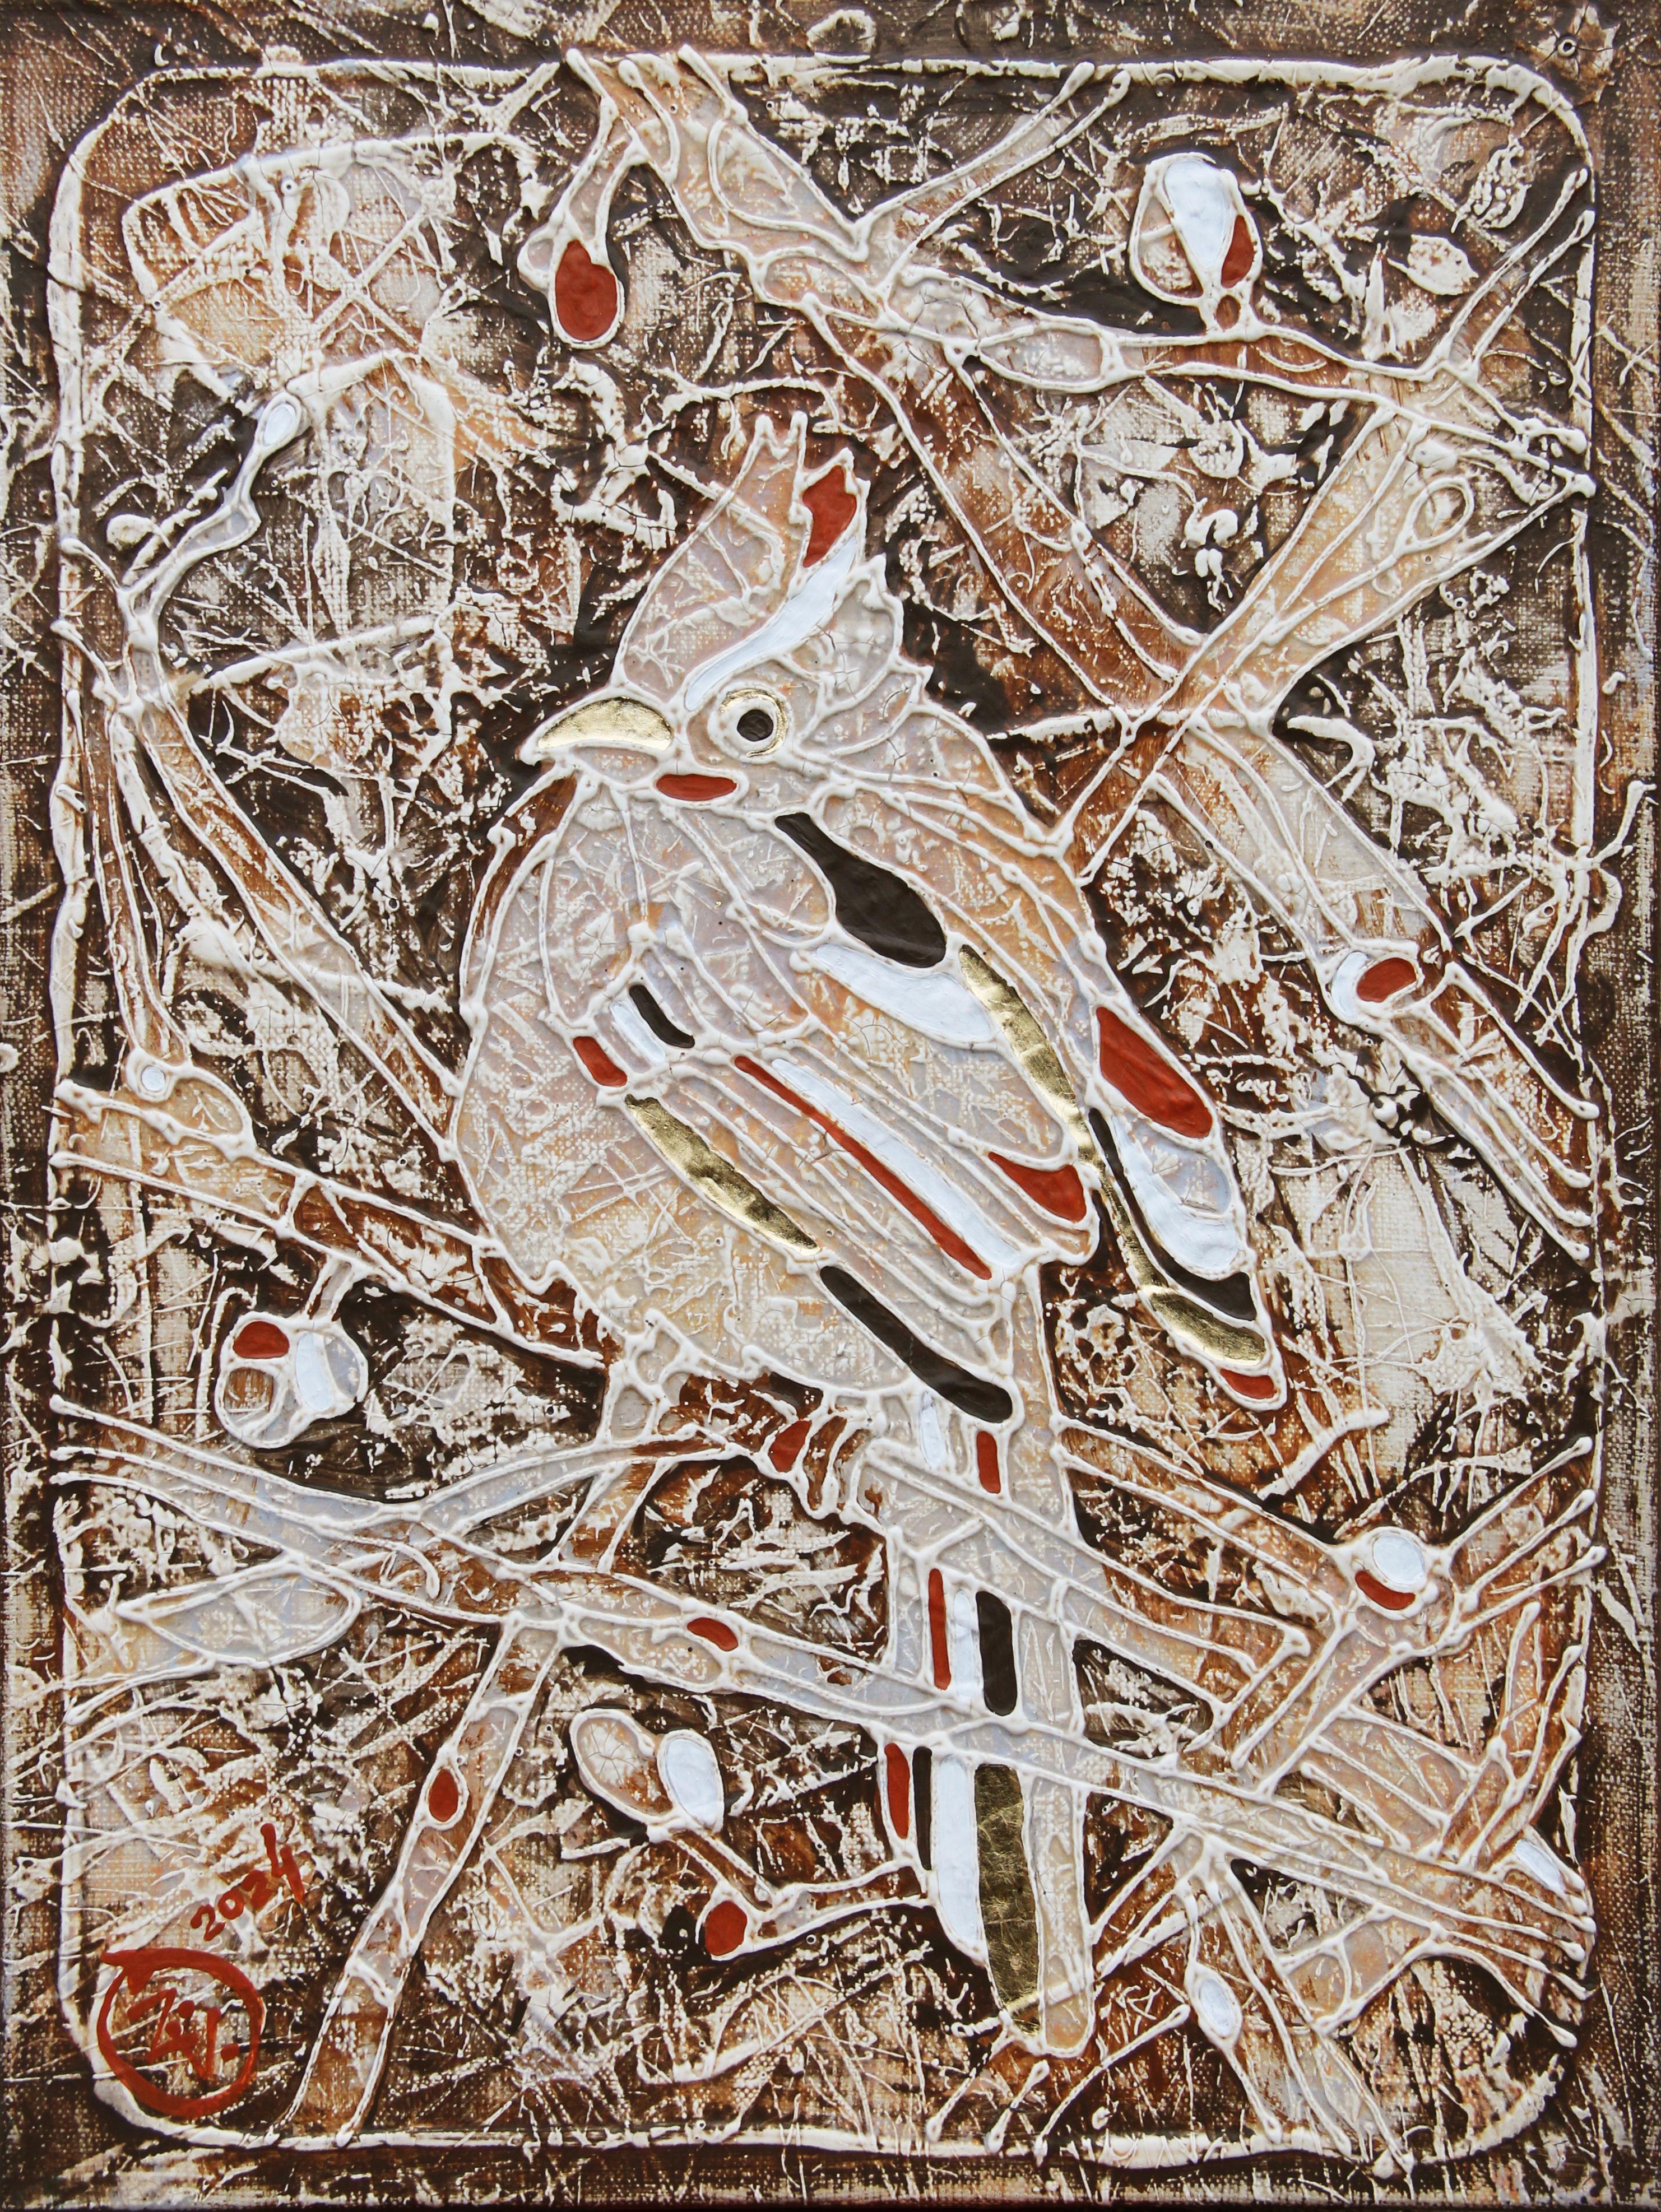 THE LAST FROSTS BIRDS by Vasili Zianko, author's volume-contour technique